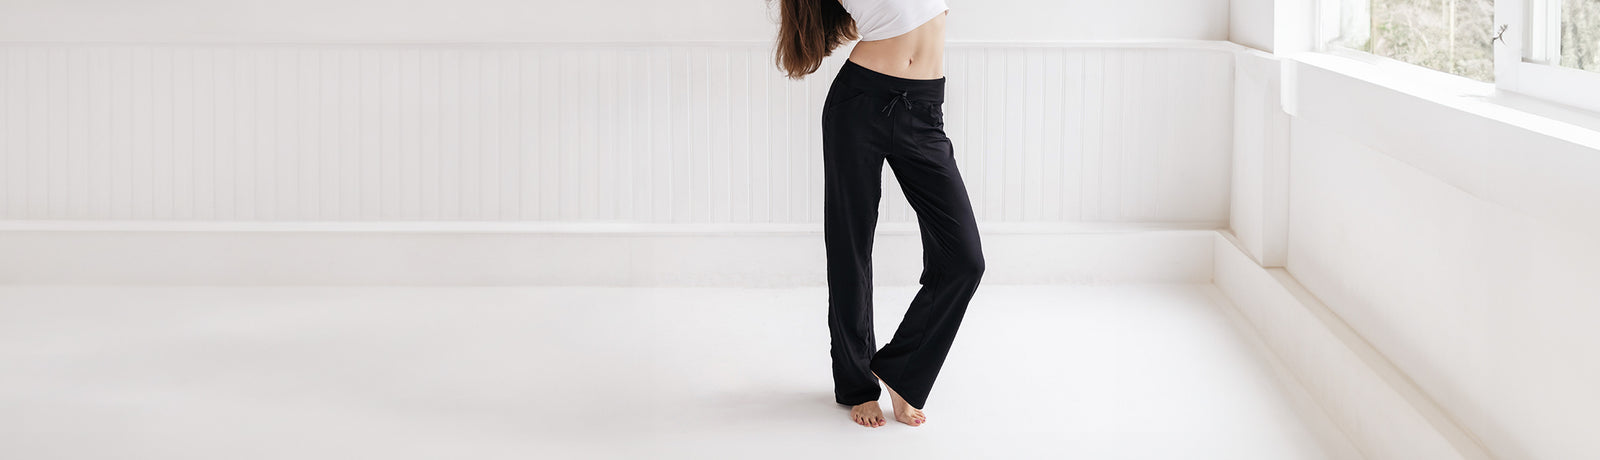 Yogipace Petite Women's 29 Fleece Lined Thermal Yoga Pants Winter Straight  Leg Warm Sweatpants,Black,Size M - Yahoo Shopping